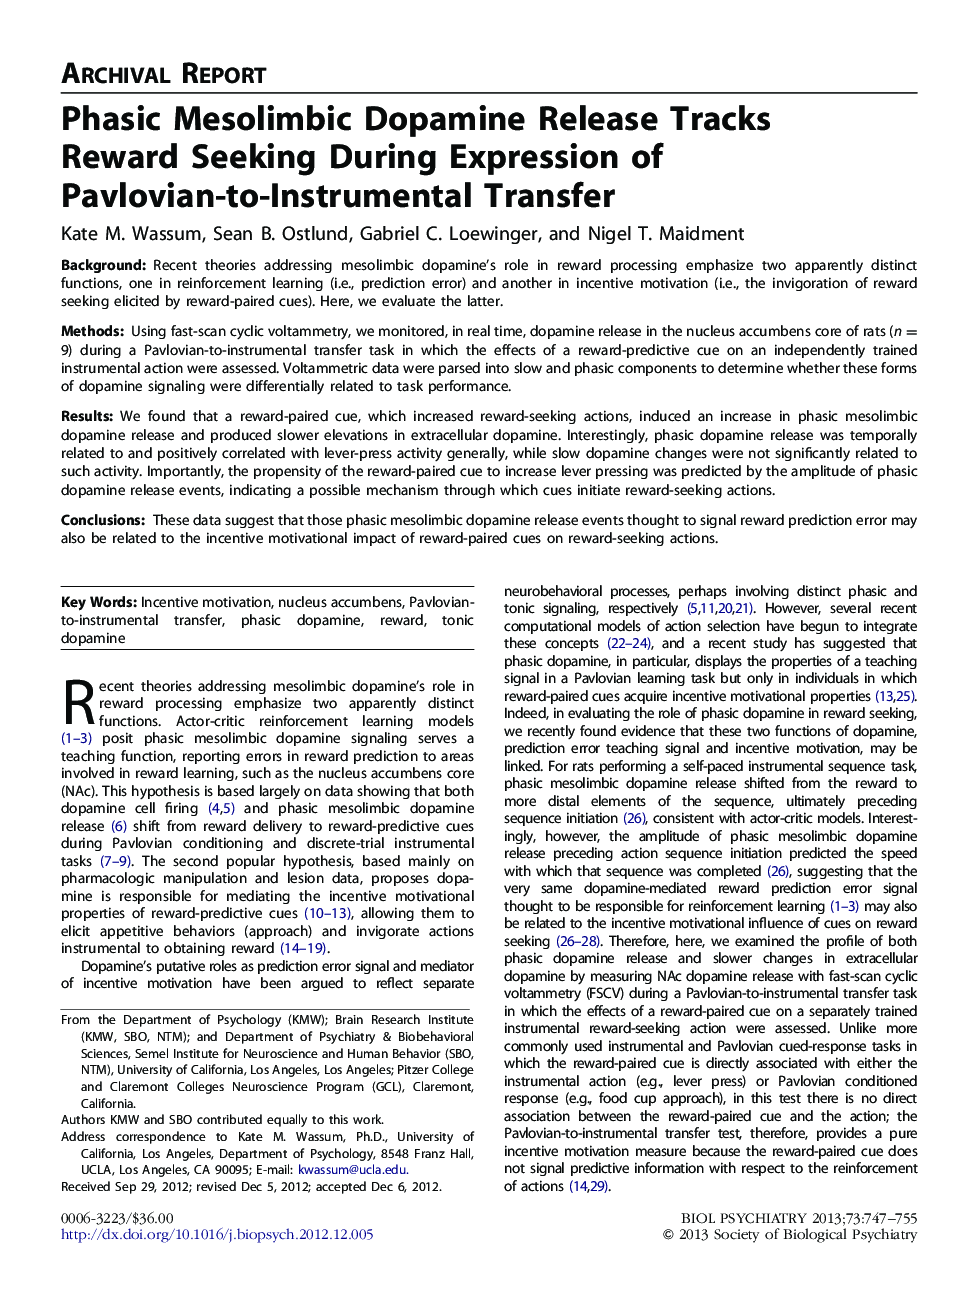 Phasic Mesolimbic Dopamine Release Tracks Reward Seeking During Expression of Pavlovian-to-Instrumental Transfer 